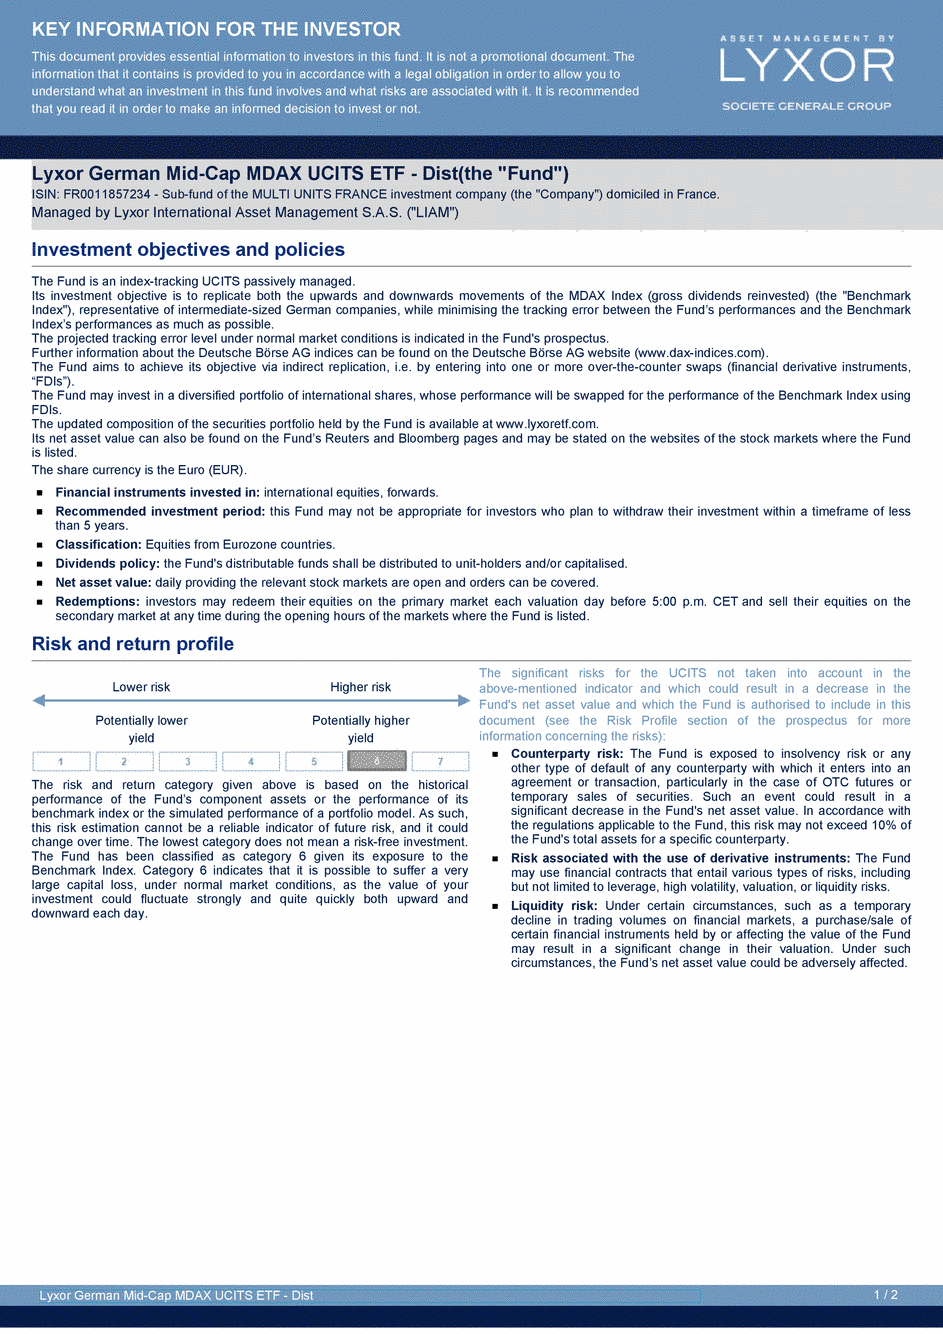 DICI Lyxor German Mid-Cap MDAX UCITS ETF - Dist - 19/02/2021 - Anglais